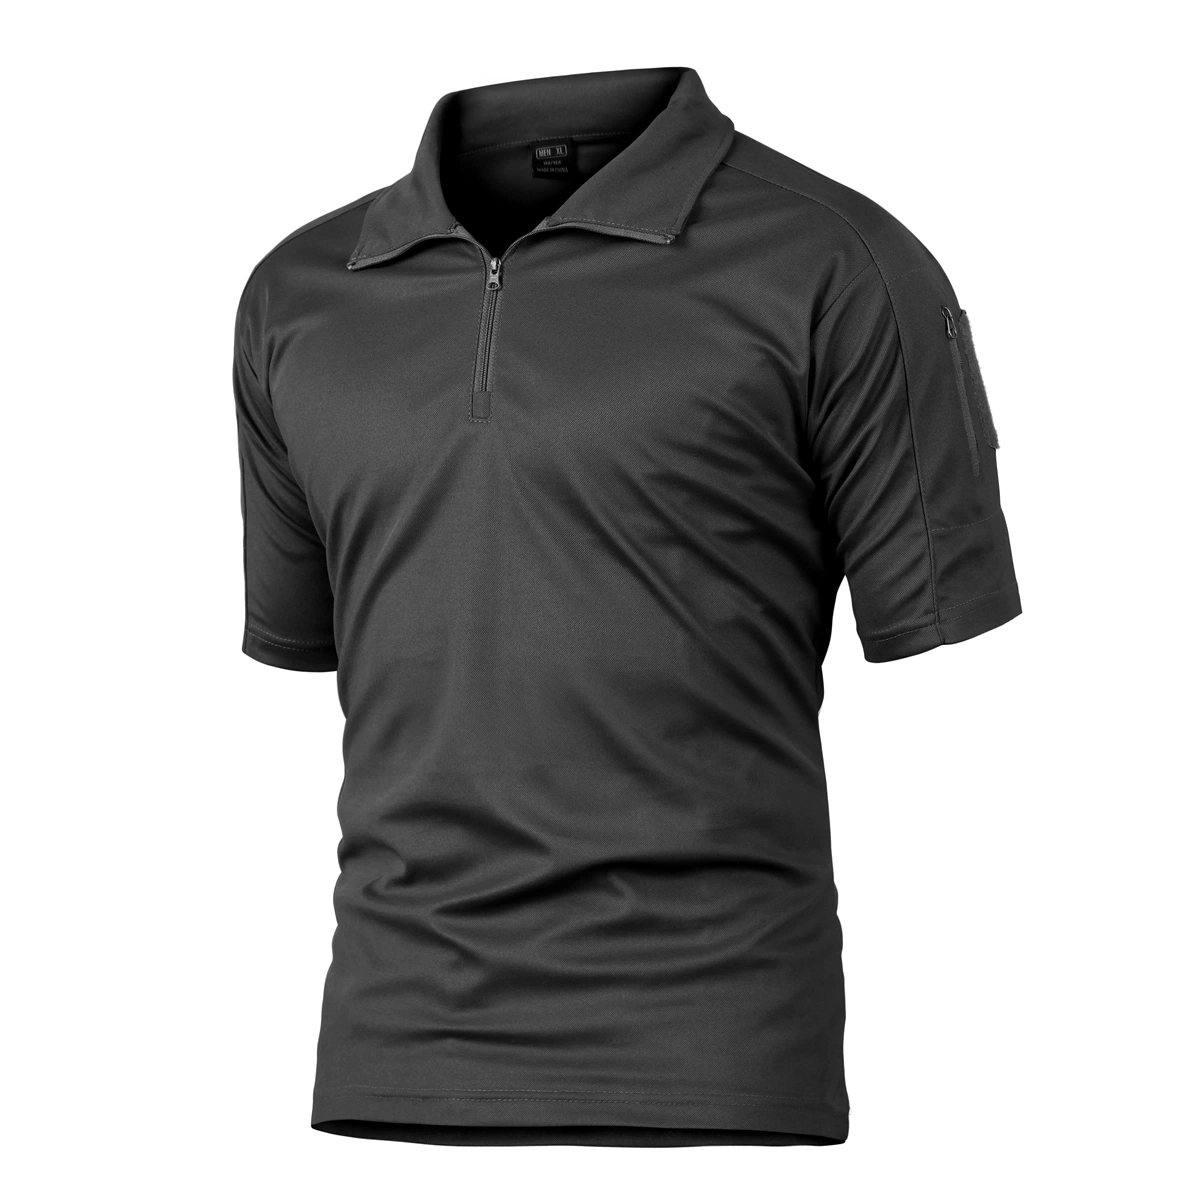 Men's Performance Short Sleeve Tactical Polo Shirt Quick Dry Lightweight Military Outdoor Hiking Sport Golf Shirt